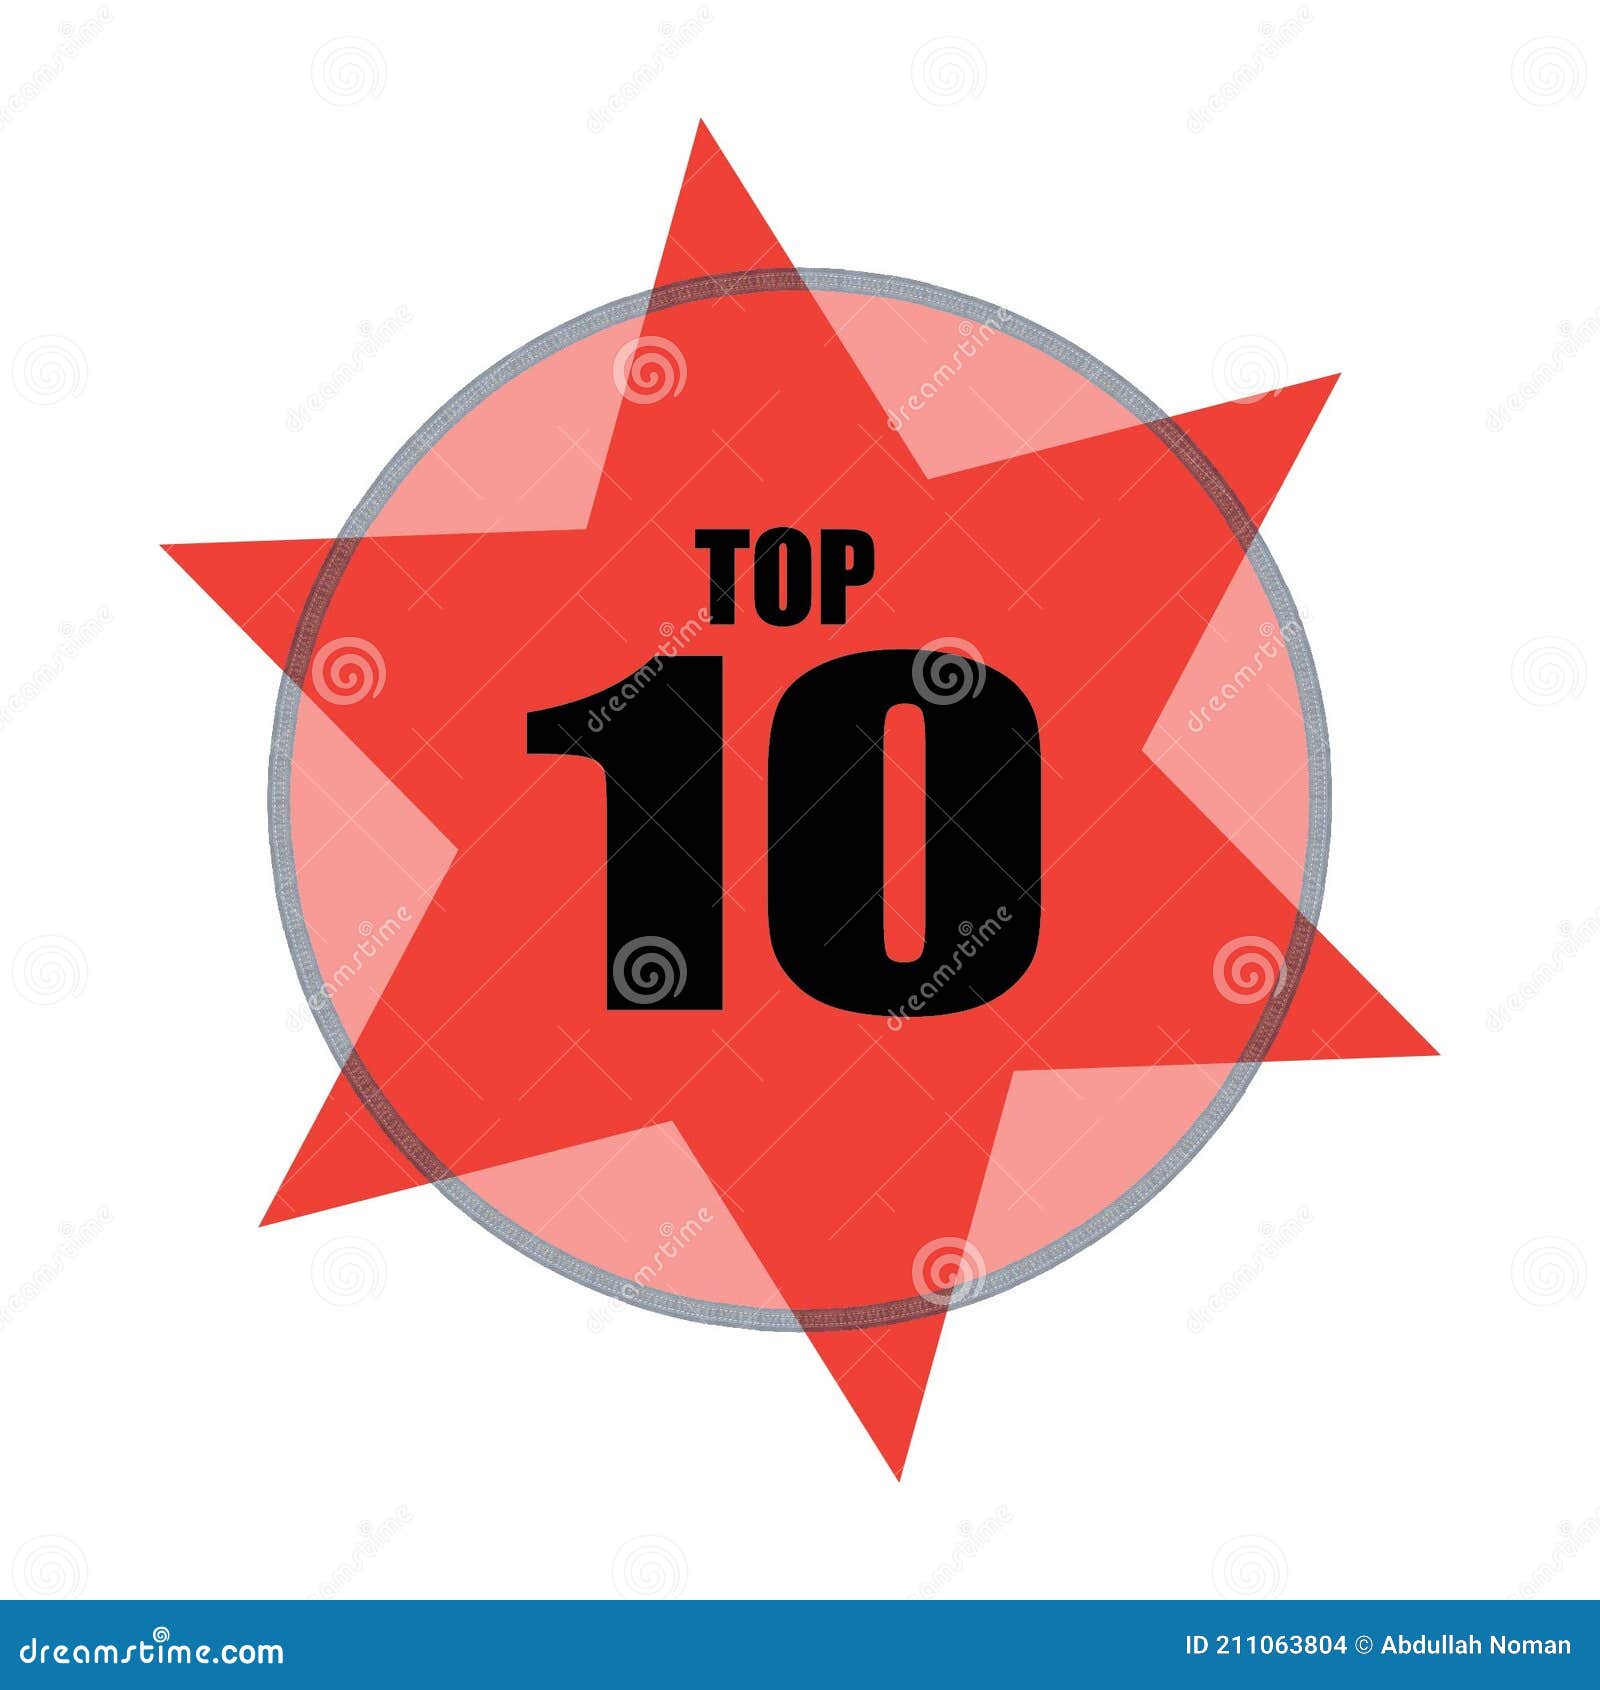 Top 10 Logo Design Vector Stock Vector. Illustration Of Number - 211063804